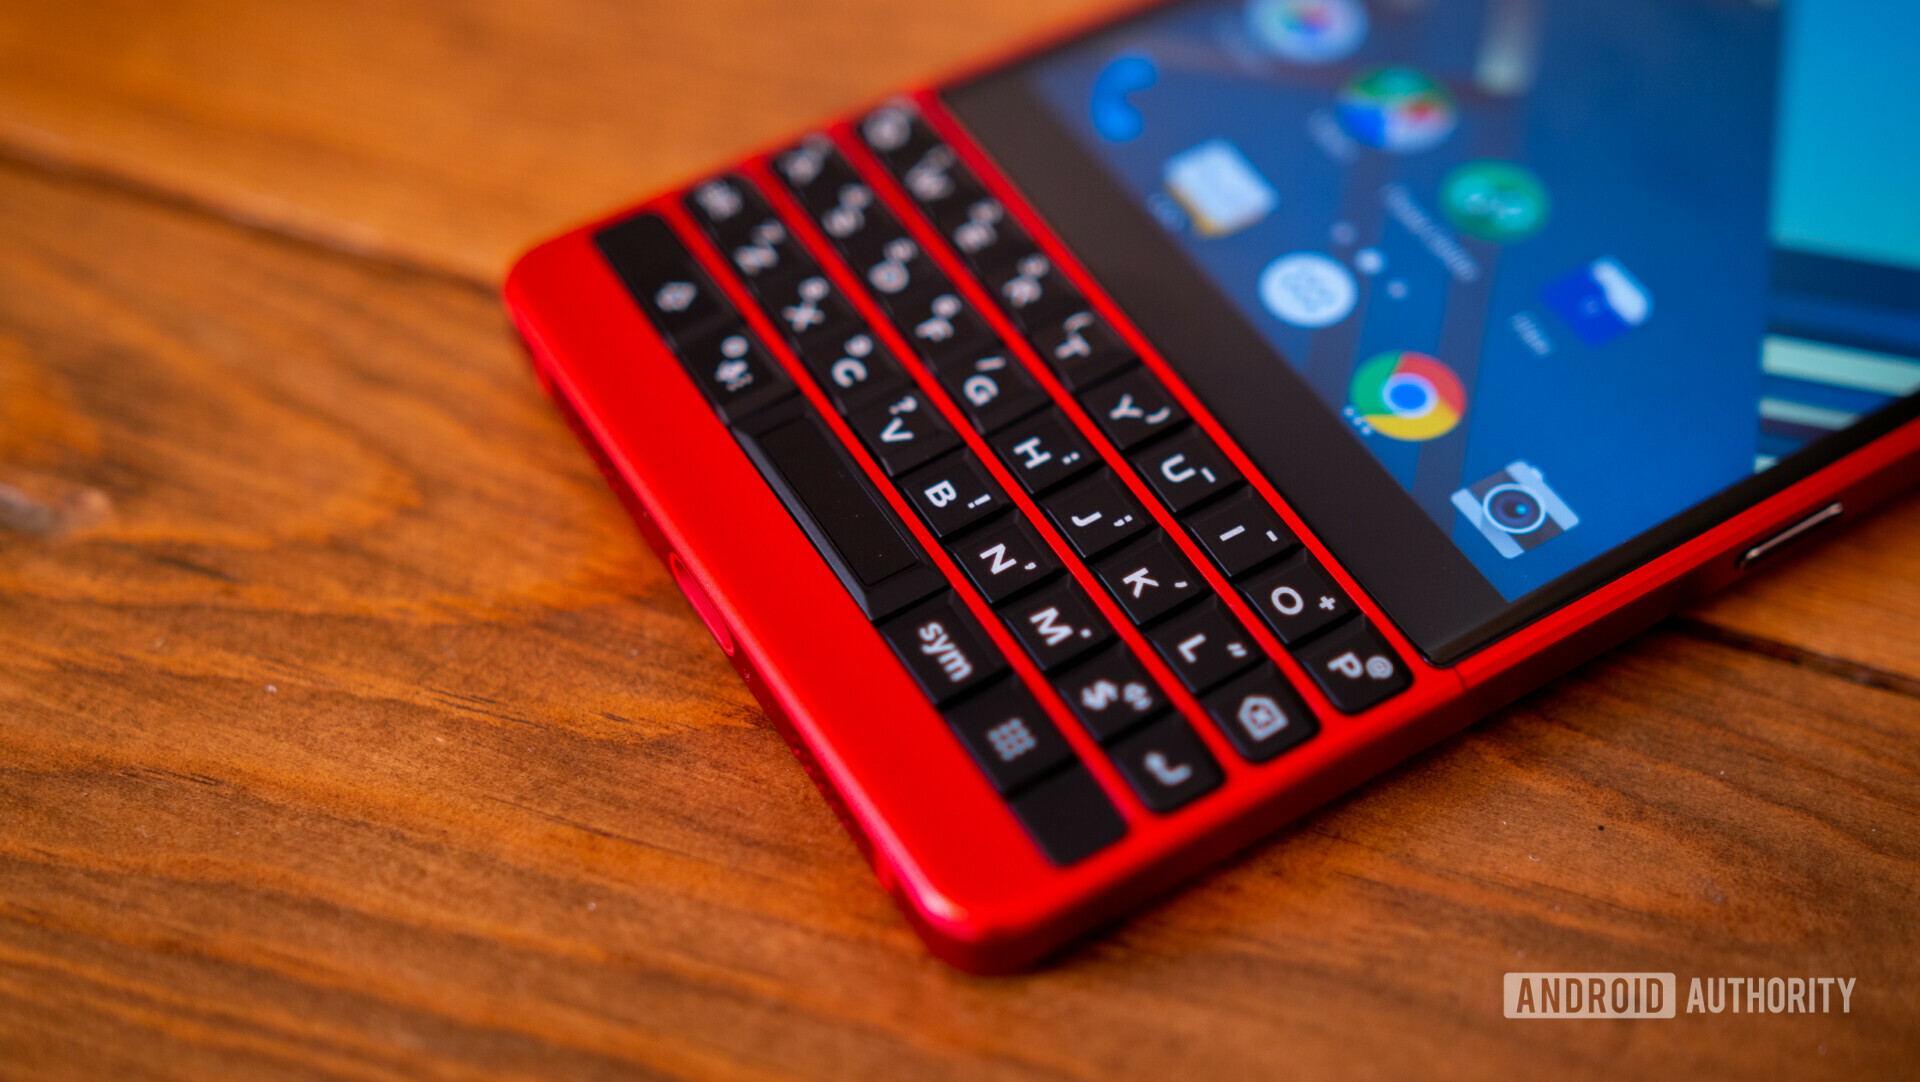 Blackberry KEY2 Red Edition keyboard